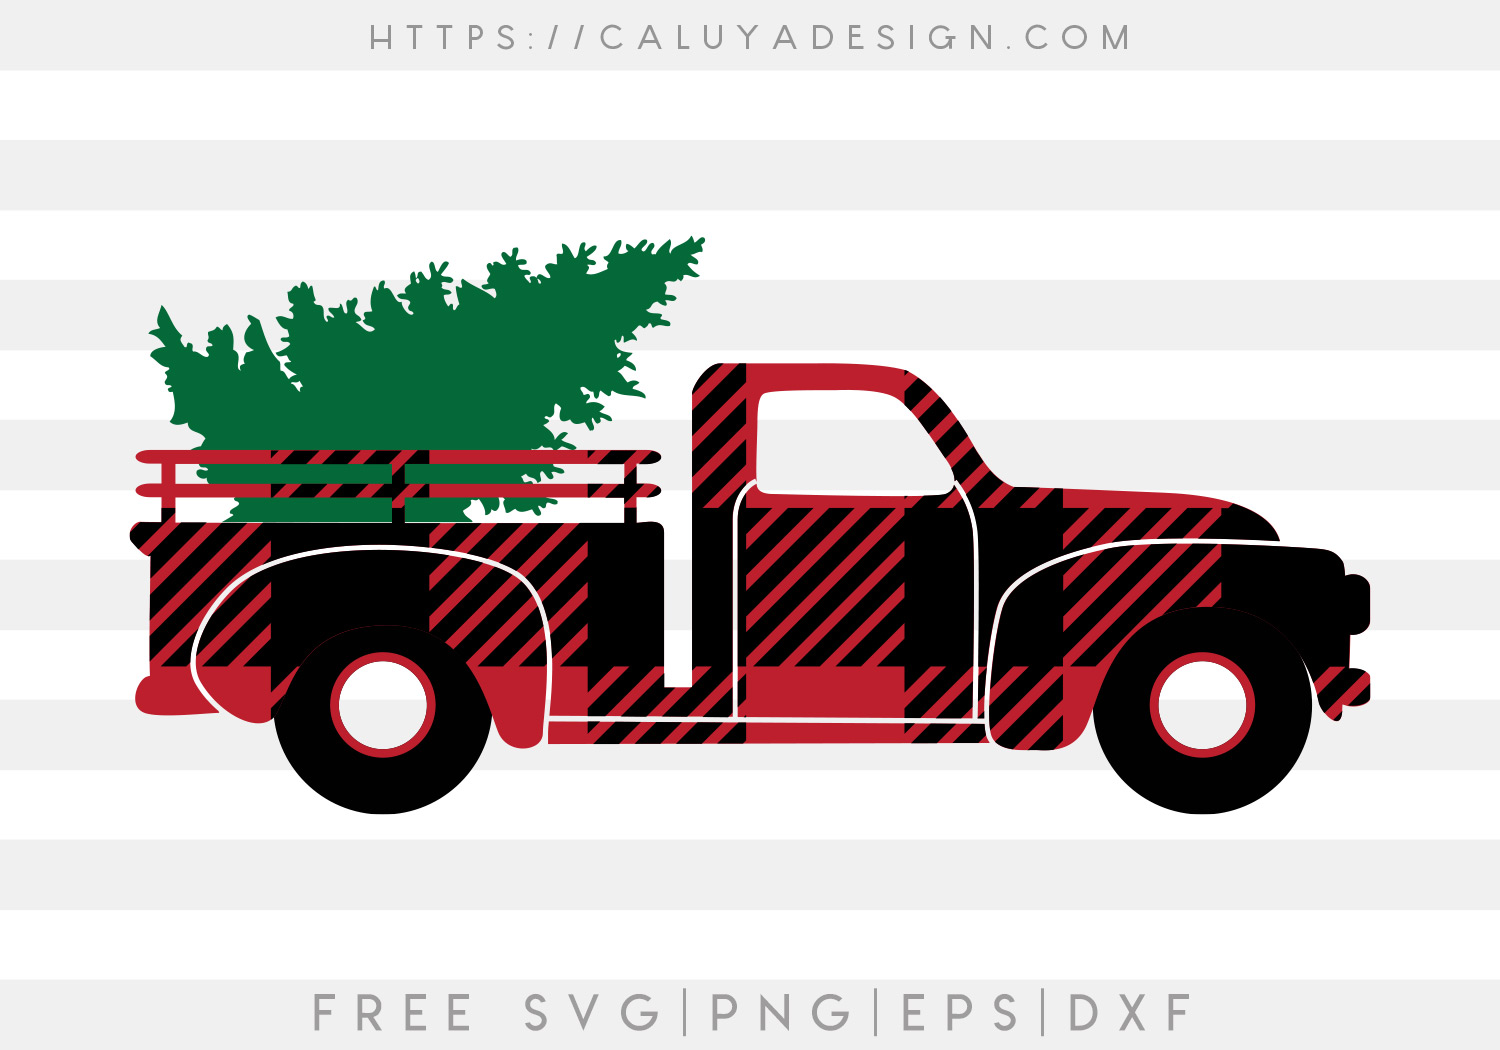 Plaid Vintage Truck SVG, PNG, EPS & DXF